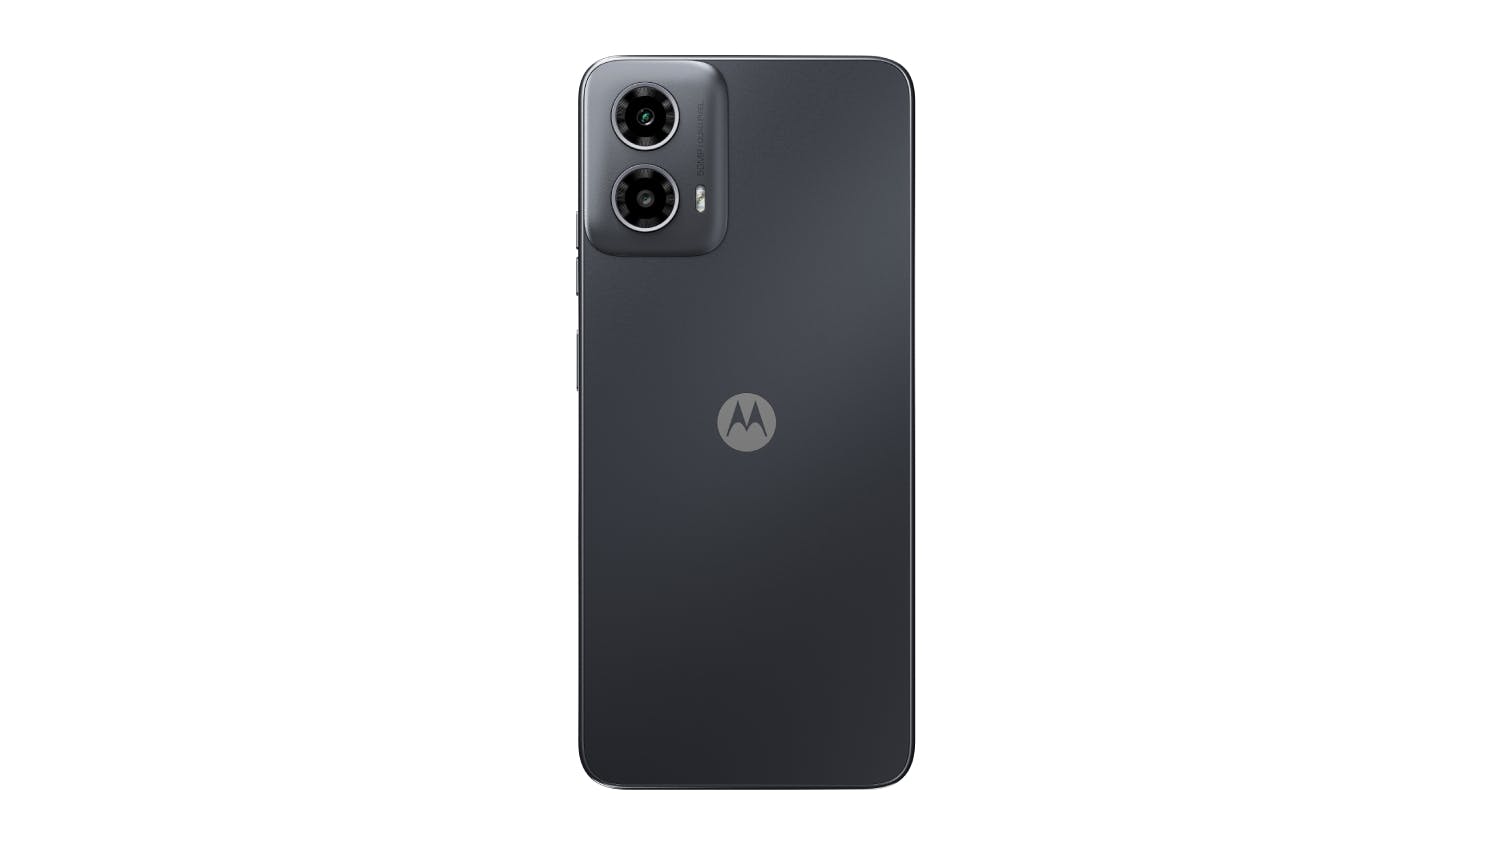 Motorola Moto G34 5G 128GB Smartphone - Charcoal Black (Spark/Open Network)